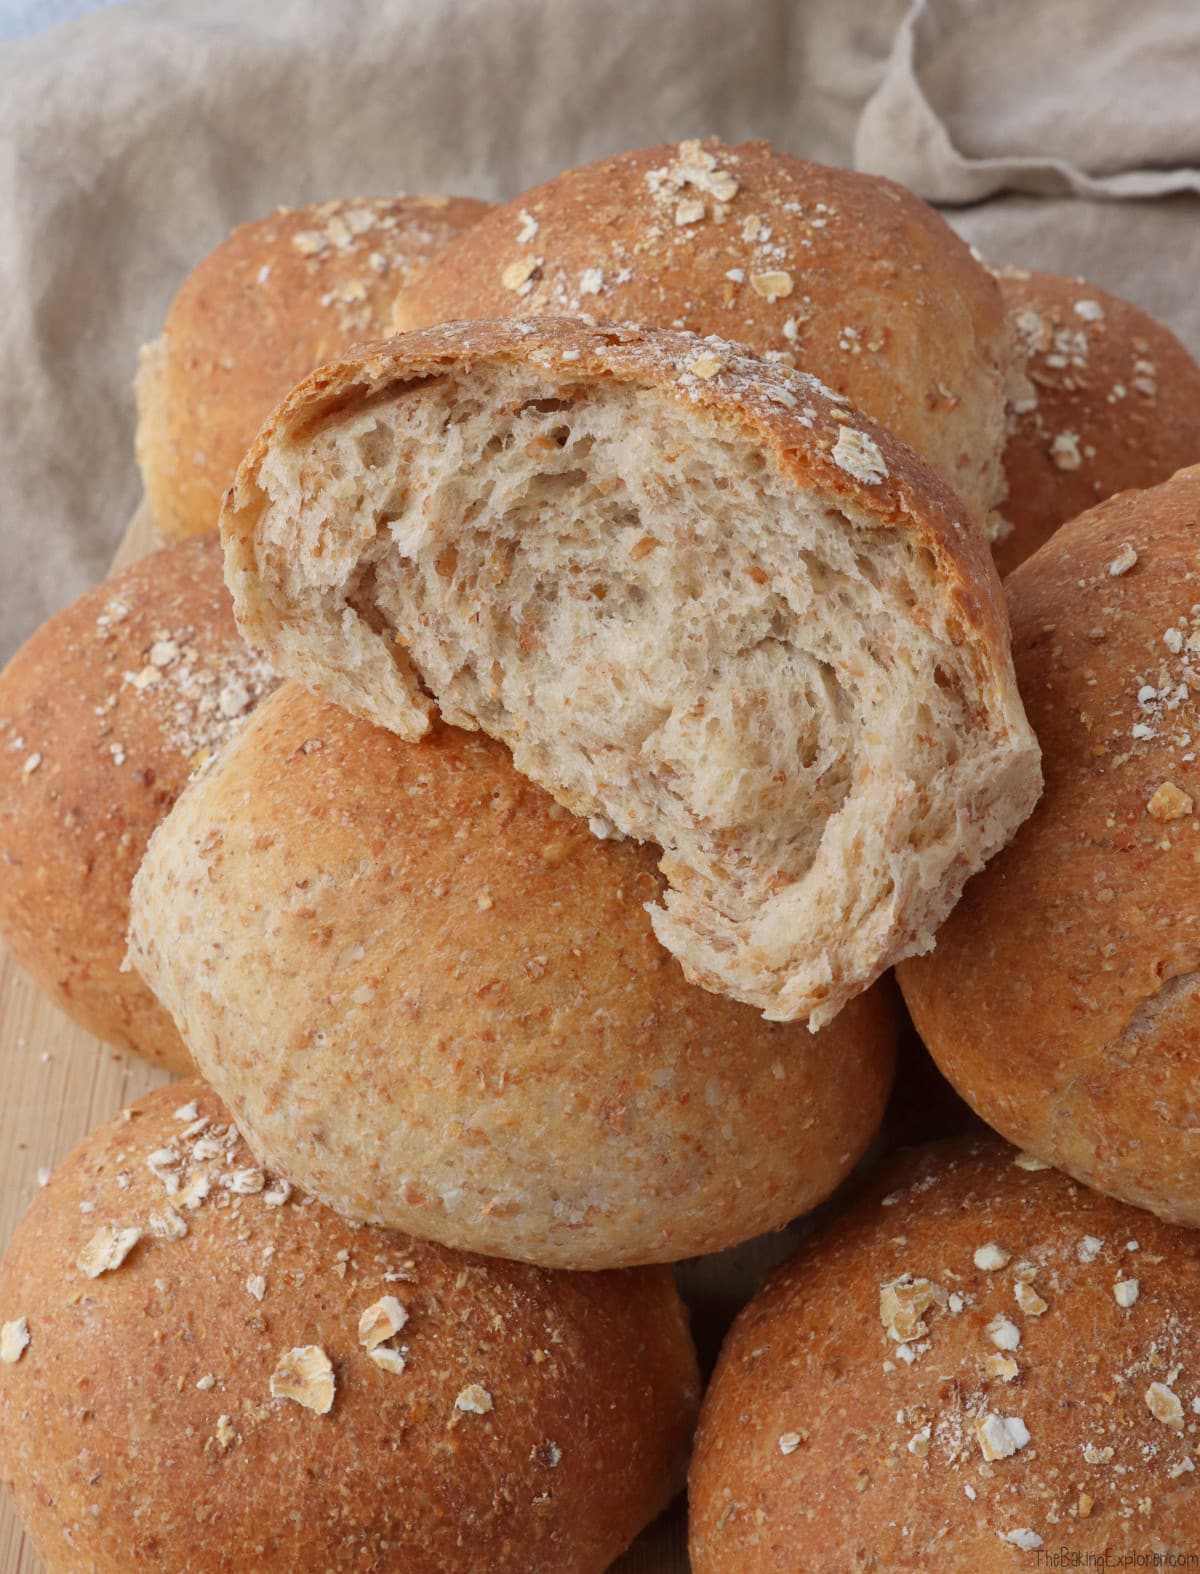 Wholemeal Bread Rolls